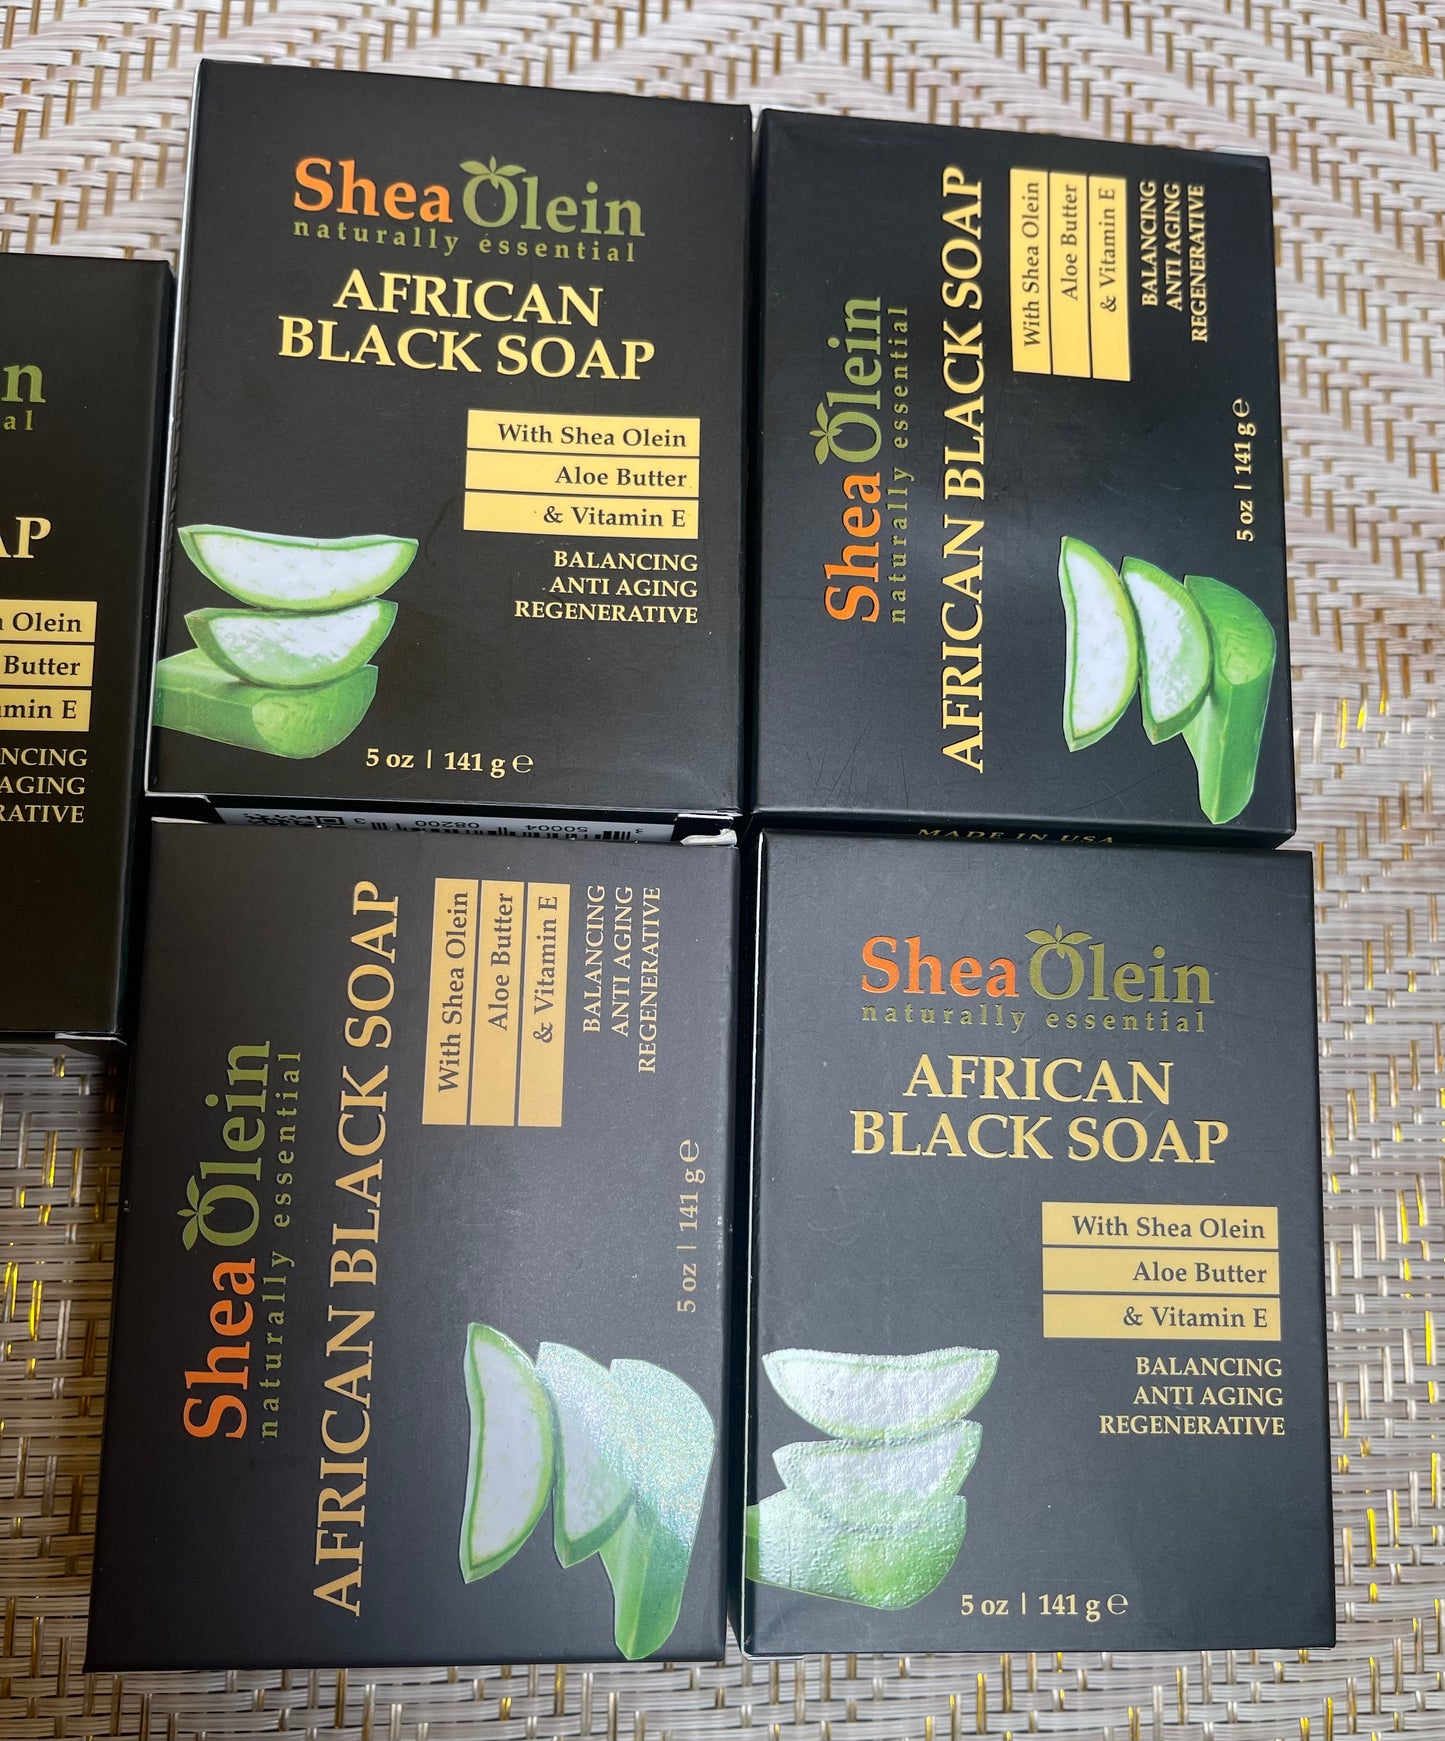 African Black Soap with Shea Olein, Aloe Butter & Vitamin E